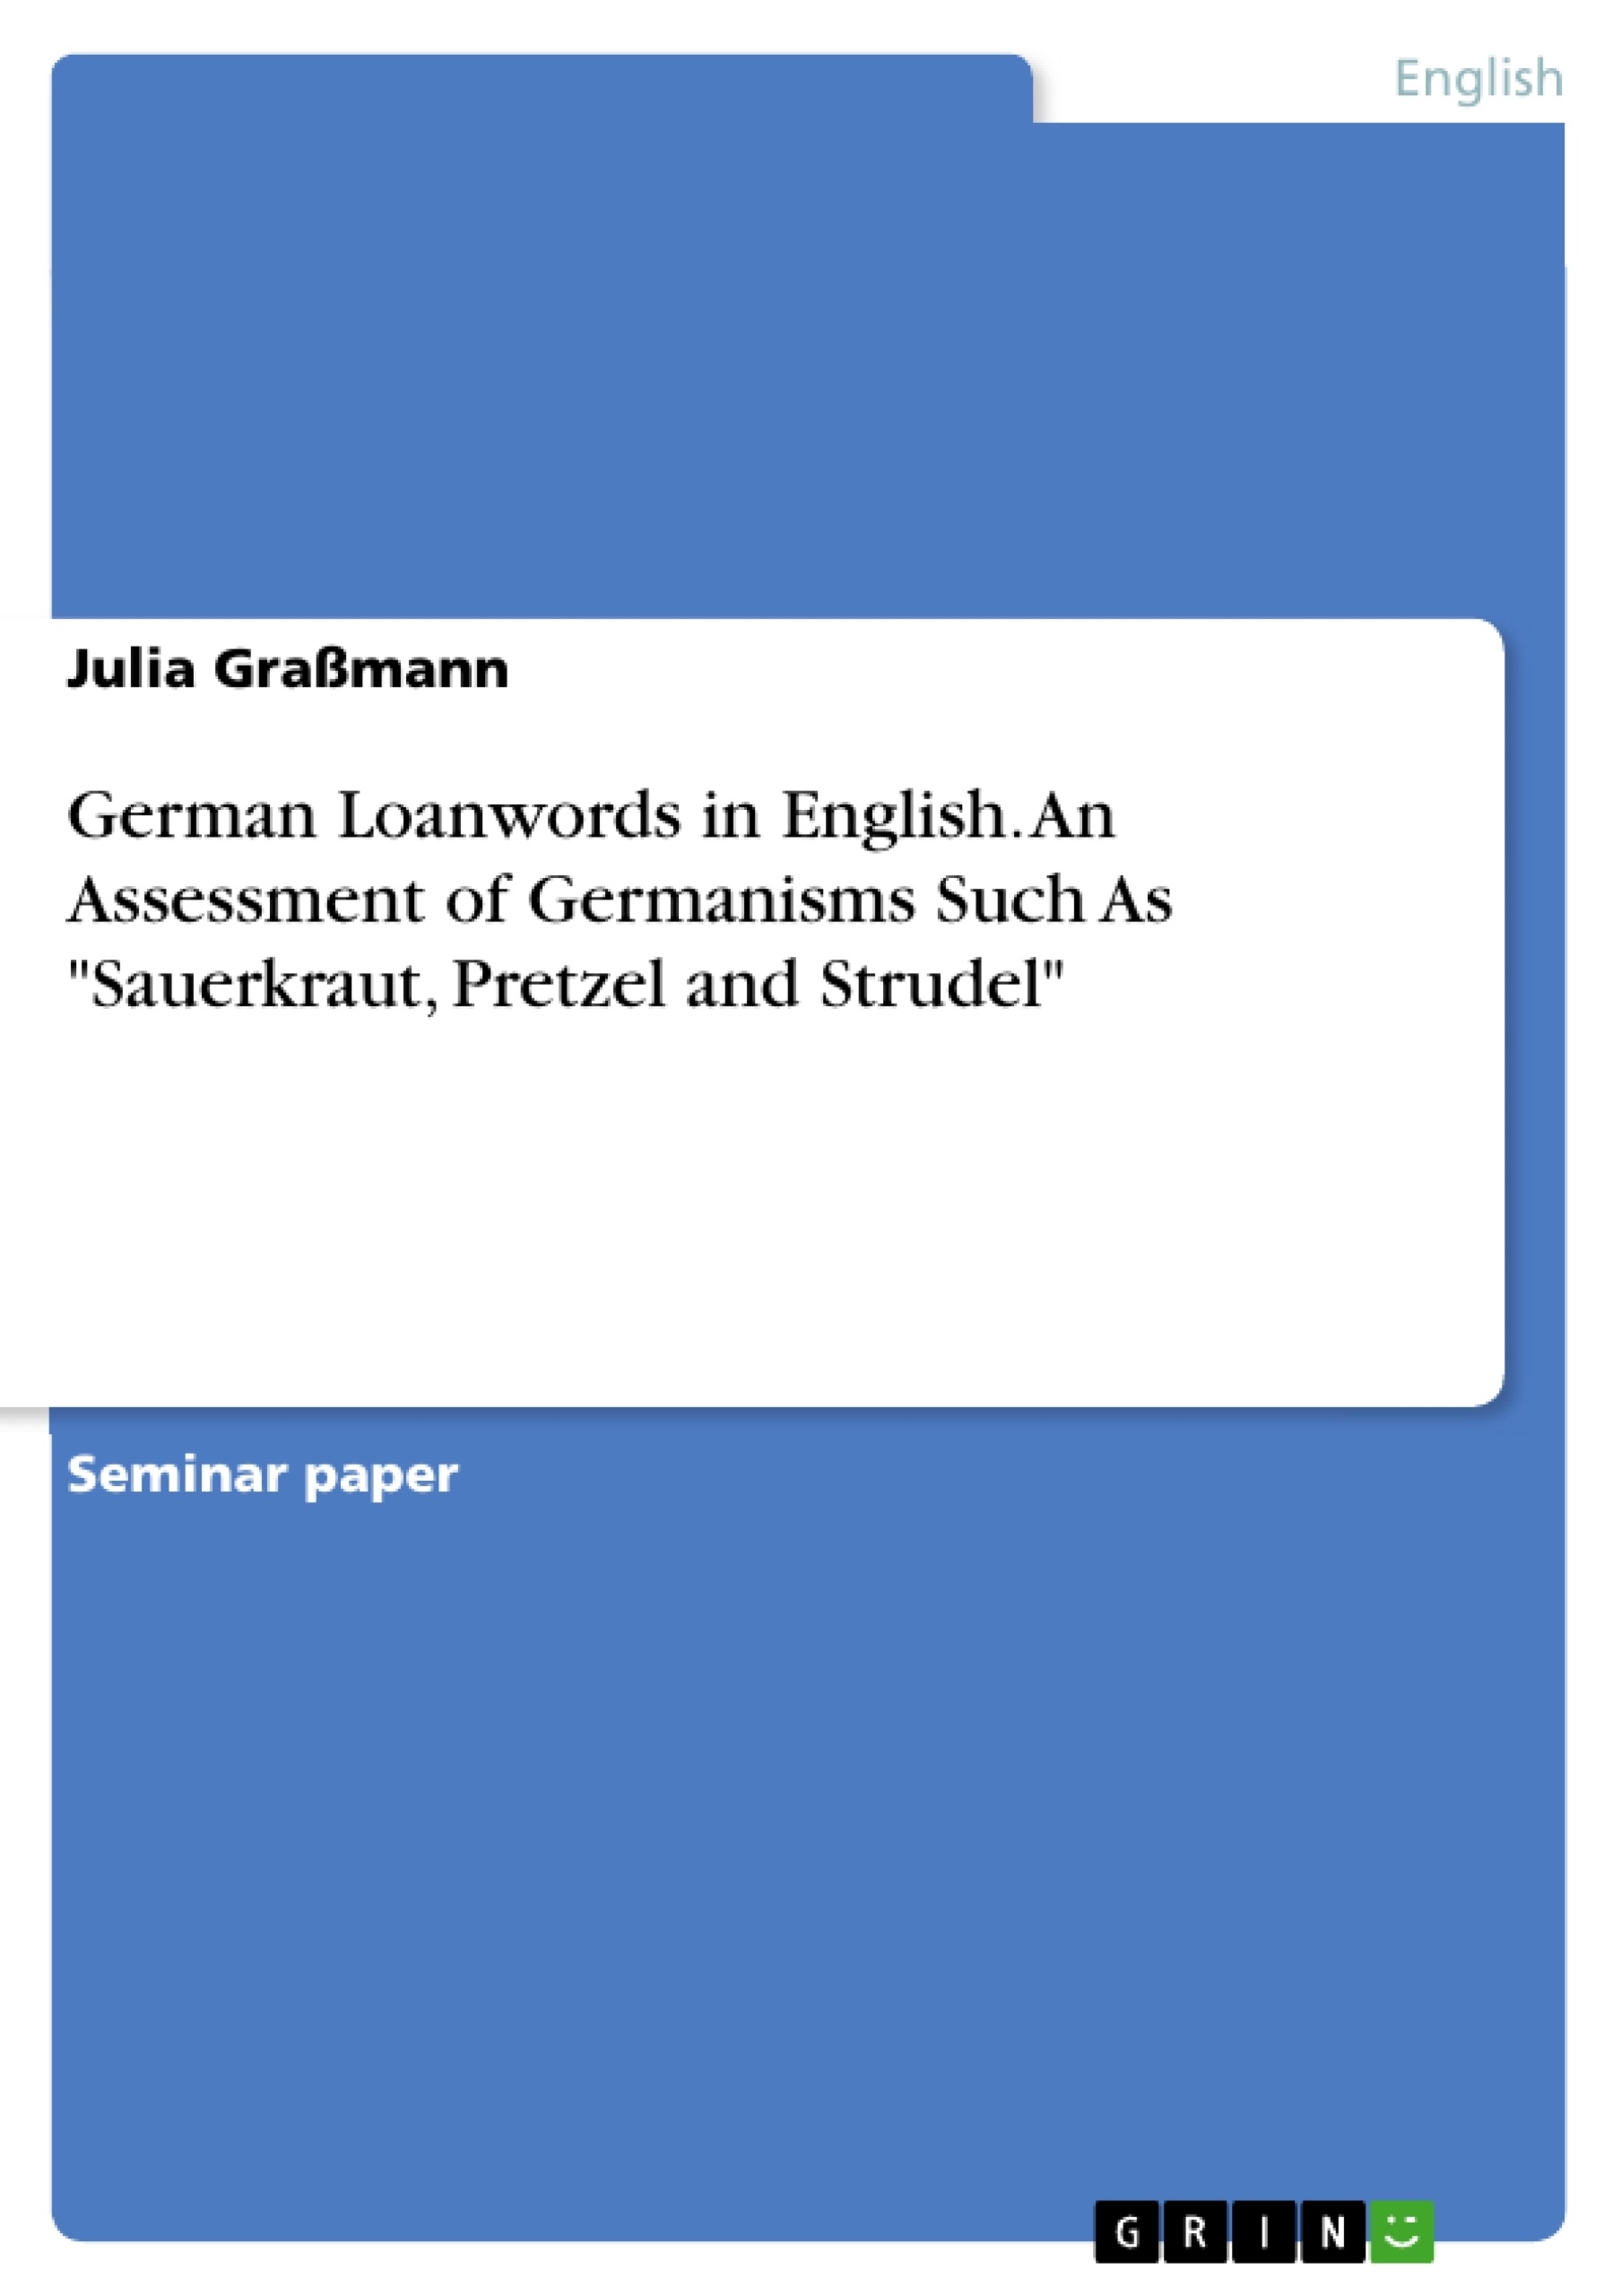 Titre: German Loanwords in English. An Assessment of Germanisms Such As "Sauerkraut, Pretzel and Strudel"